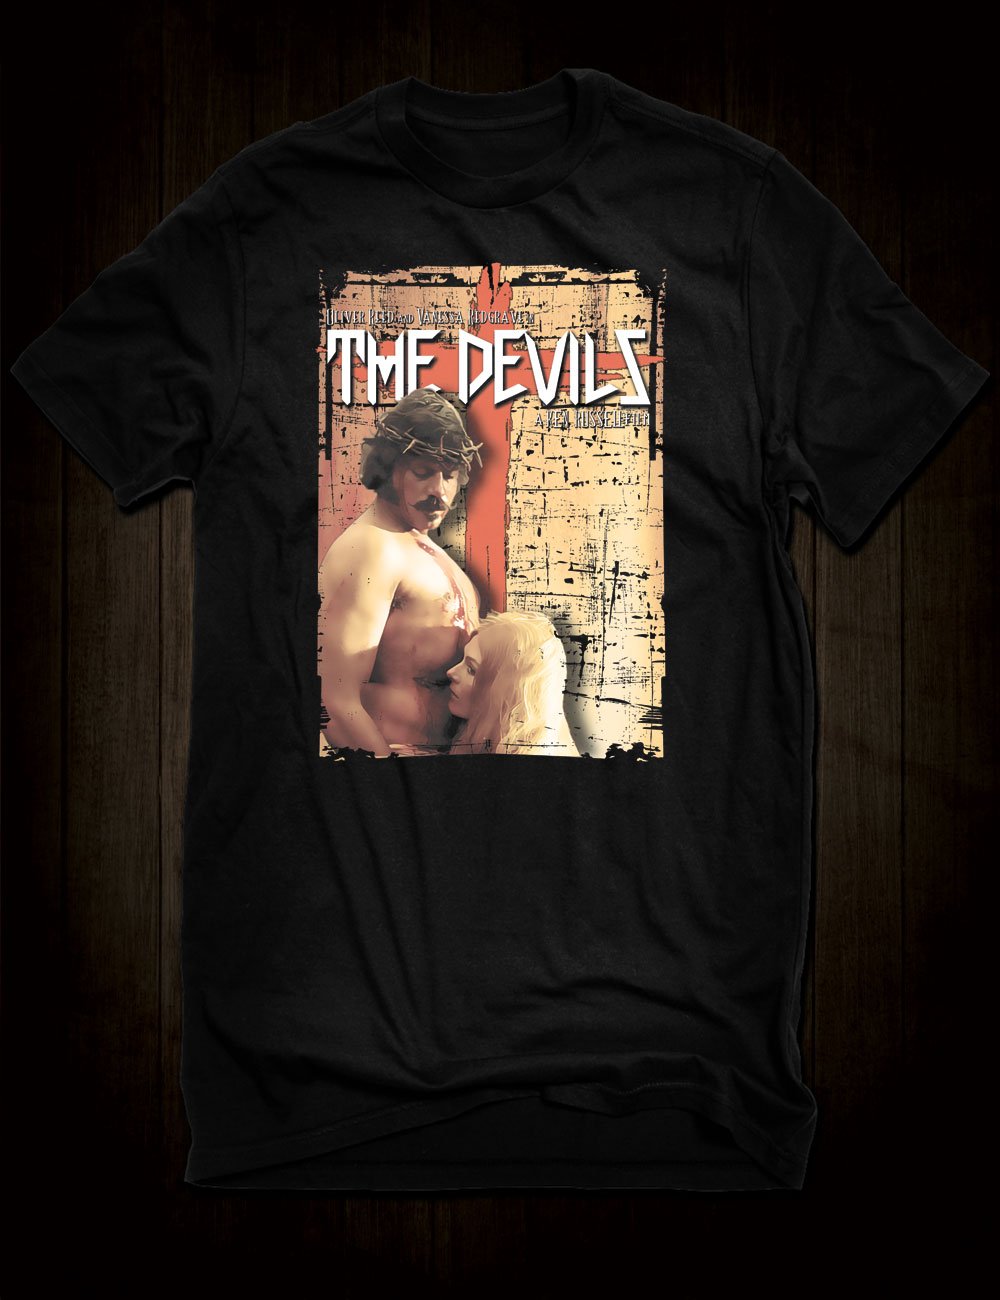 The Devils T-Shirt